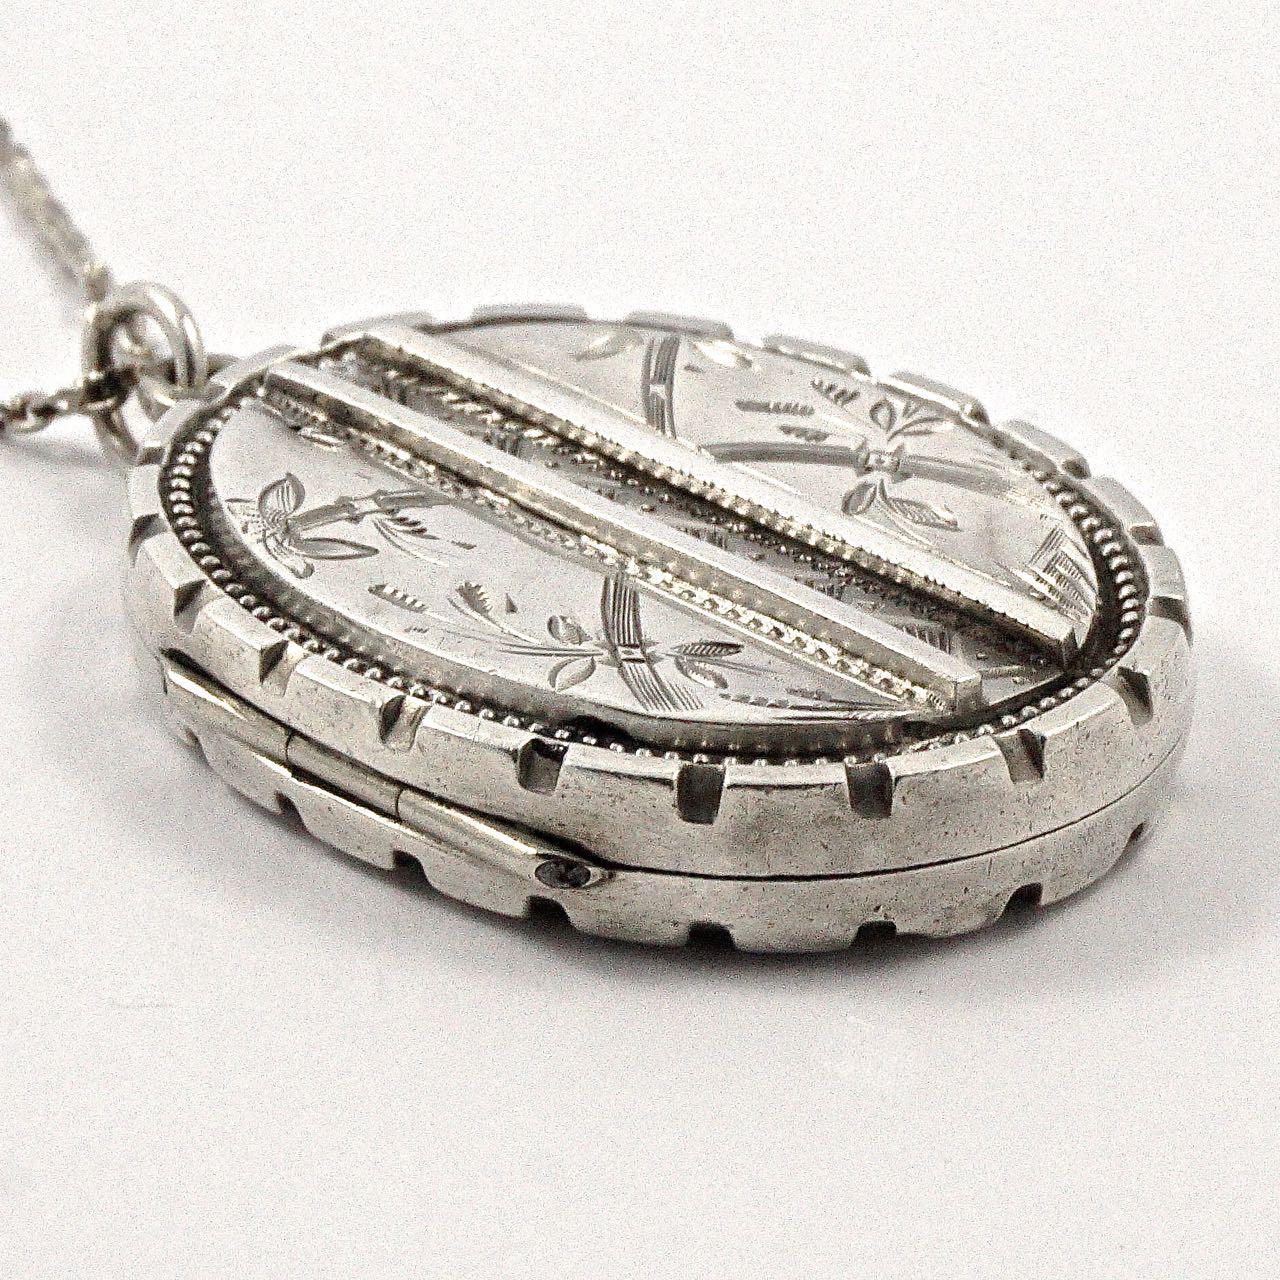 victorian silver locket